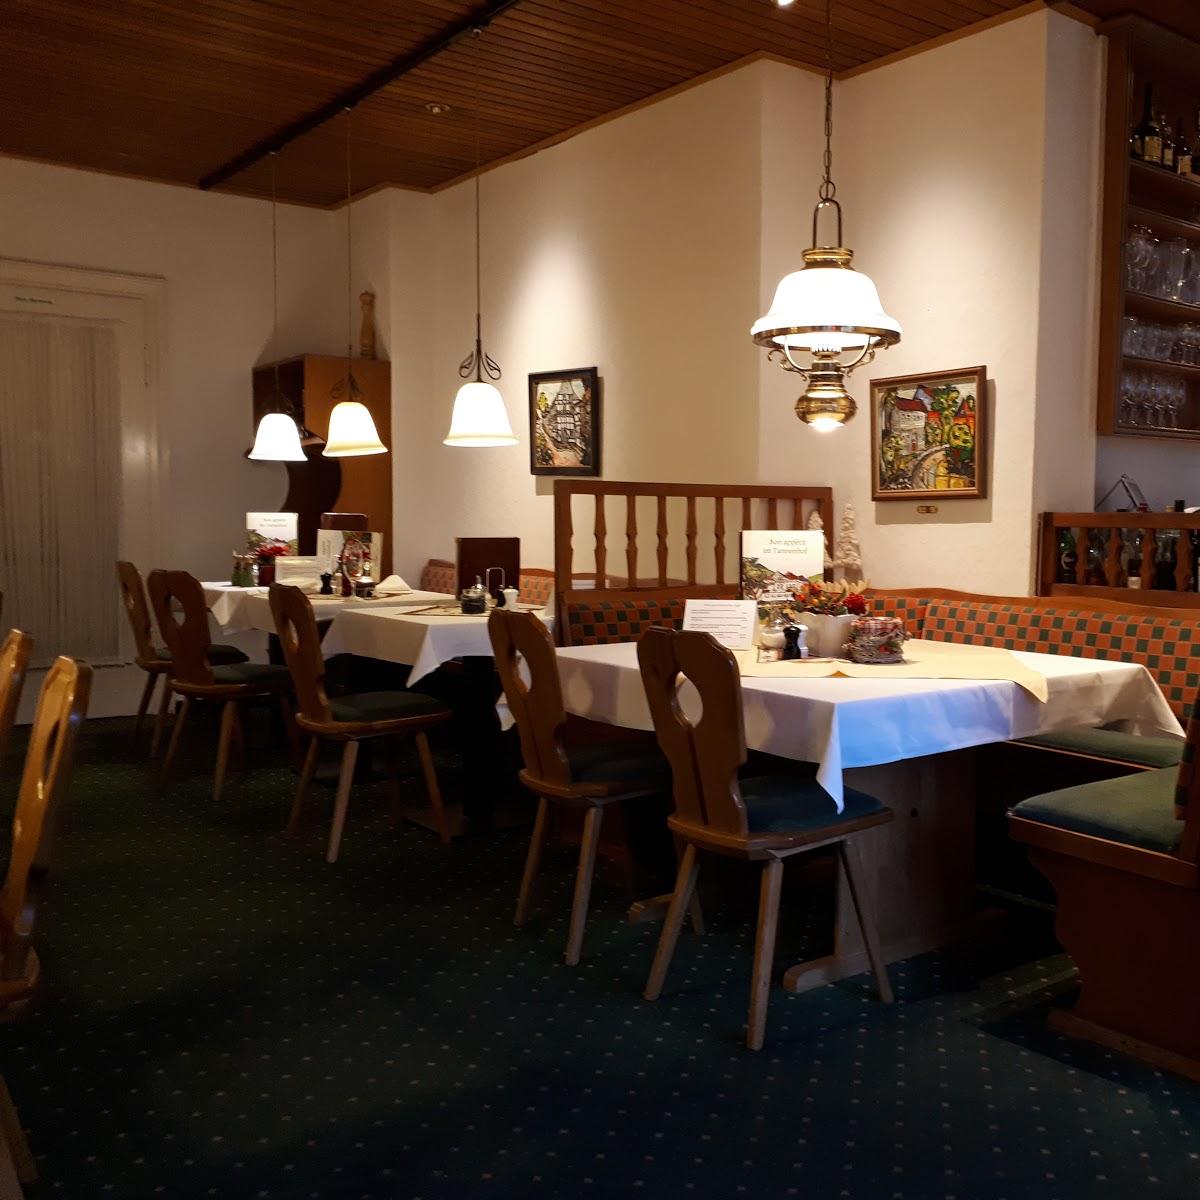 Restaurant "Hotel Tannenhof Inh. Inge Brabant" in Bad Harzburg